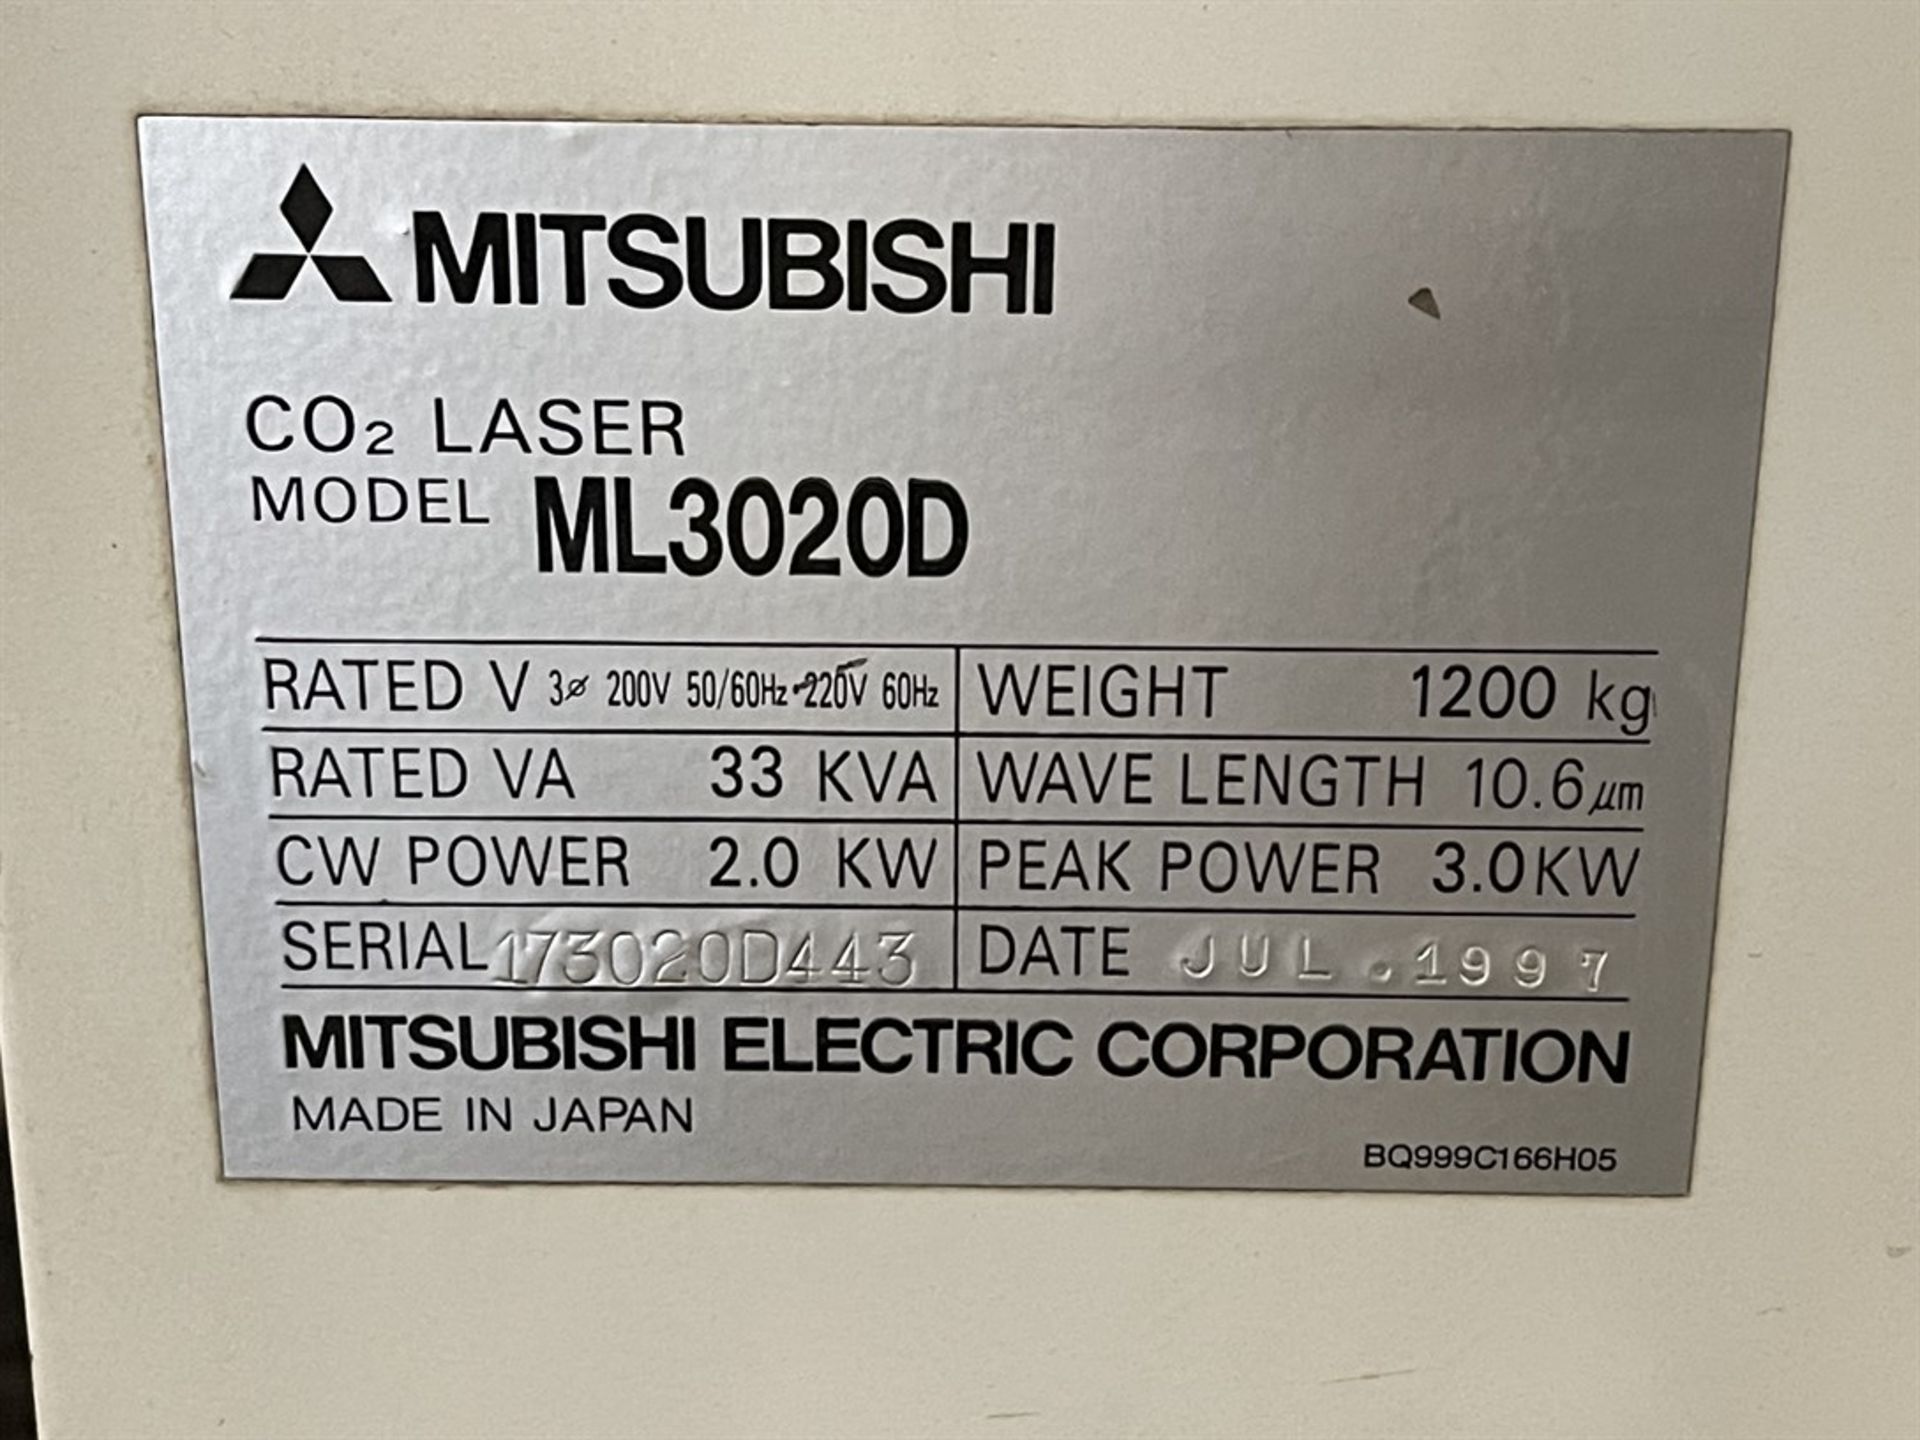 MITSUBISHI ML2512LXP CO2 Laser, s/n LH-14281, Mitsubishi LC10BV Control, w/ ML3020D 3 KW - Image 10 of 11